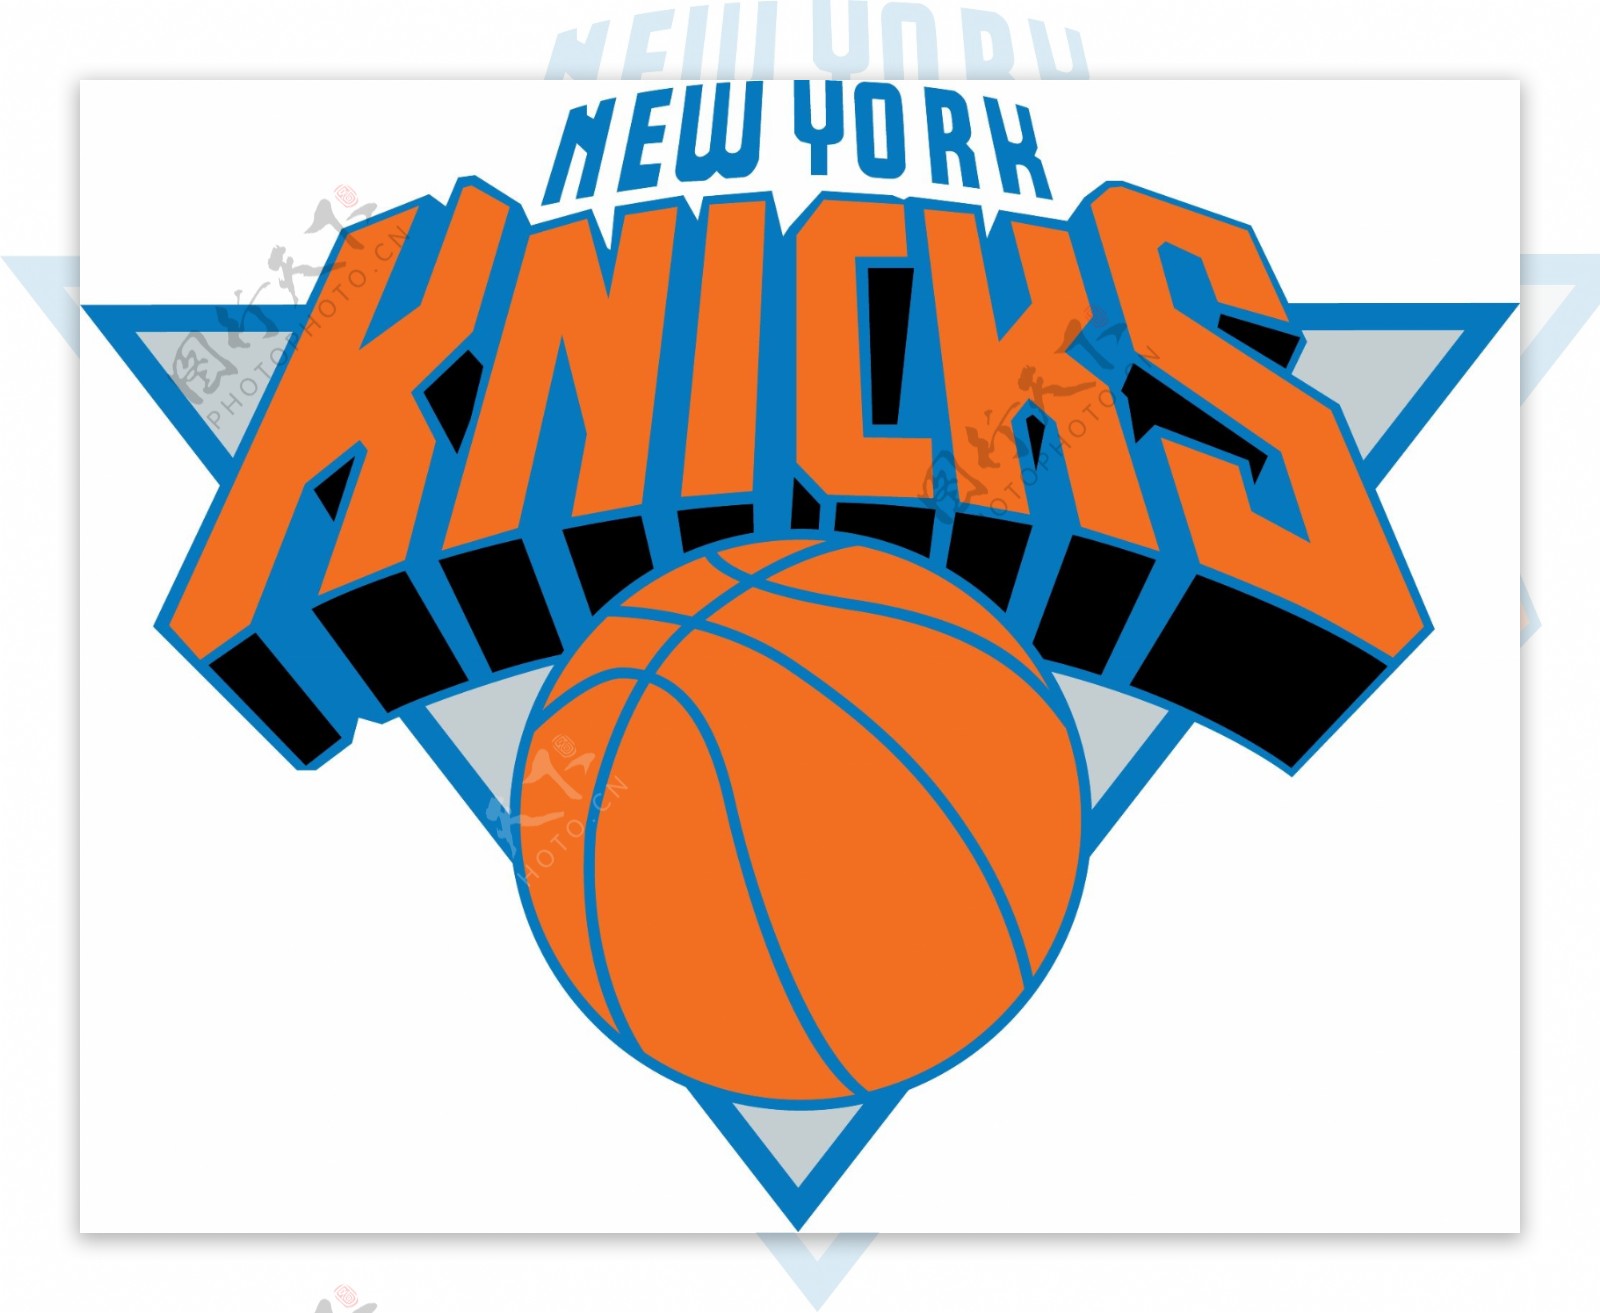 NewYorkKnicks标志图片